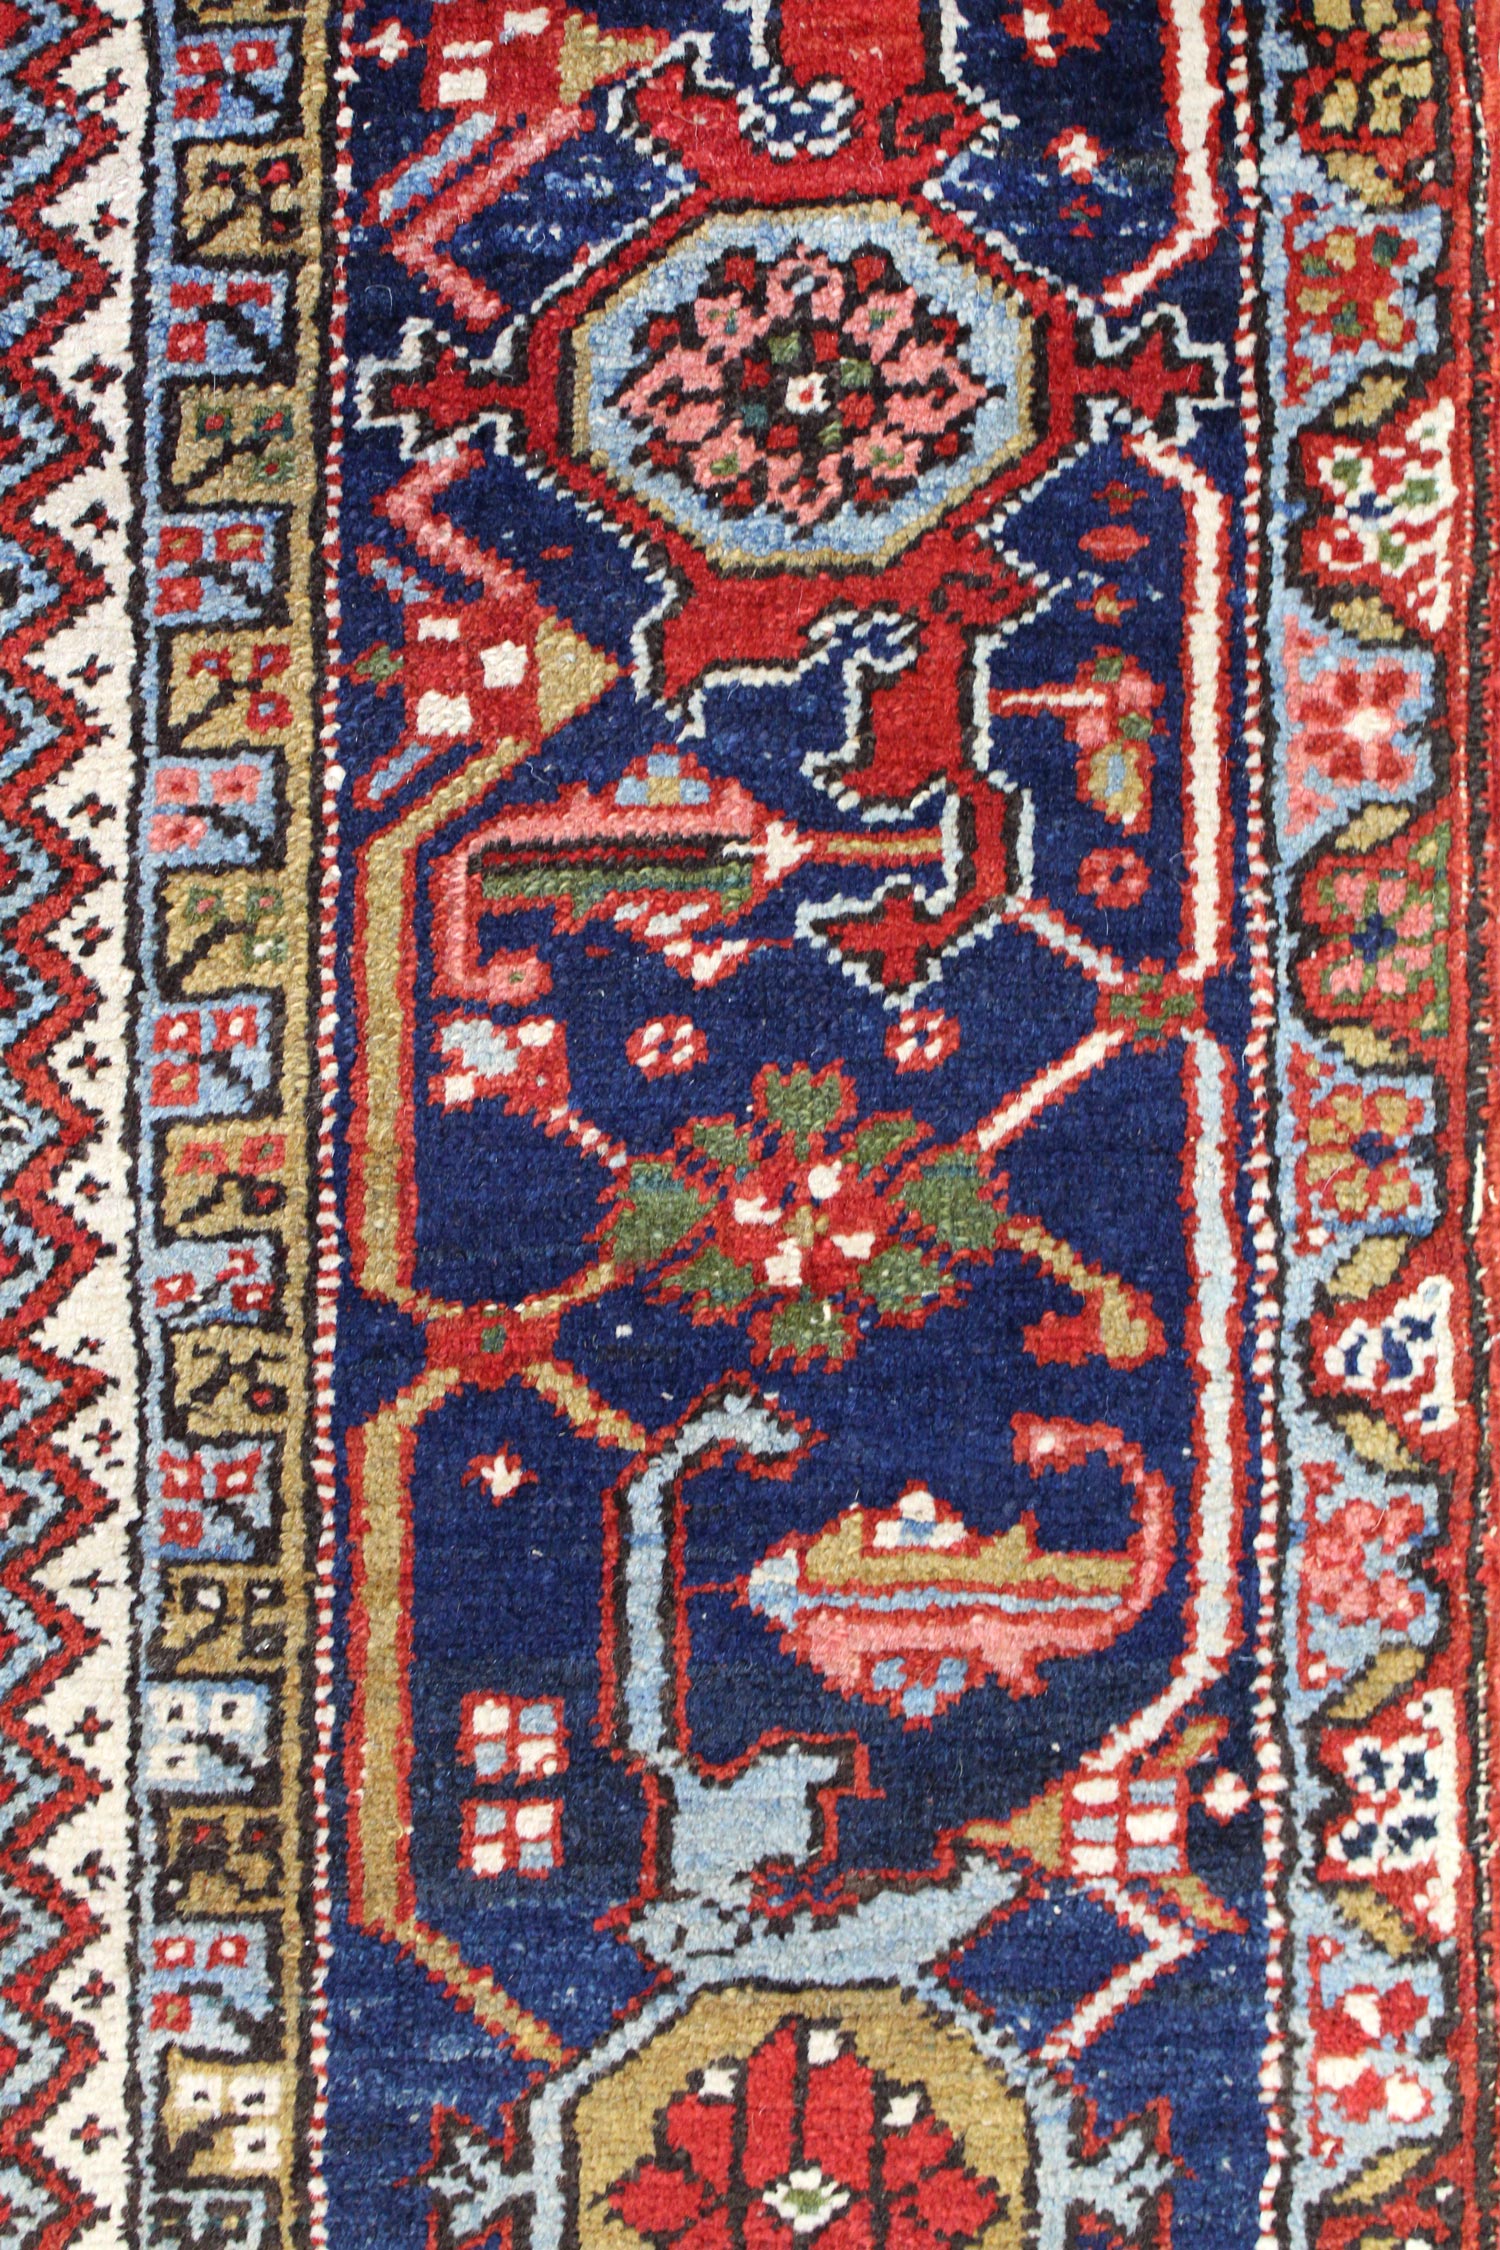 Handsome Hamadan- 1930s Antique Persian Rug - Tribal Carpet - 2'4 x 3'9  ft - Rouzatirugs